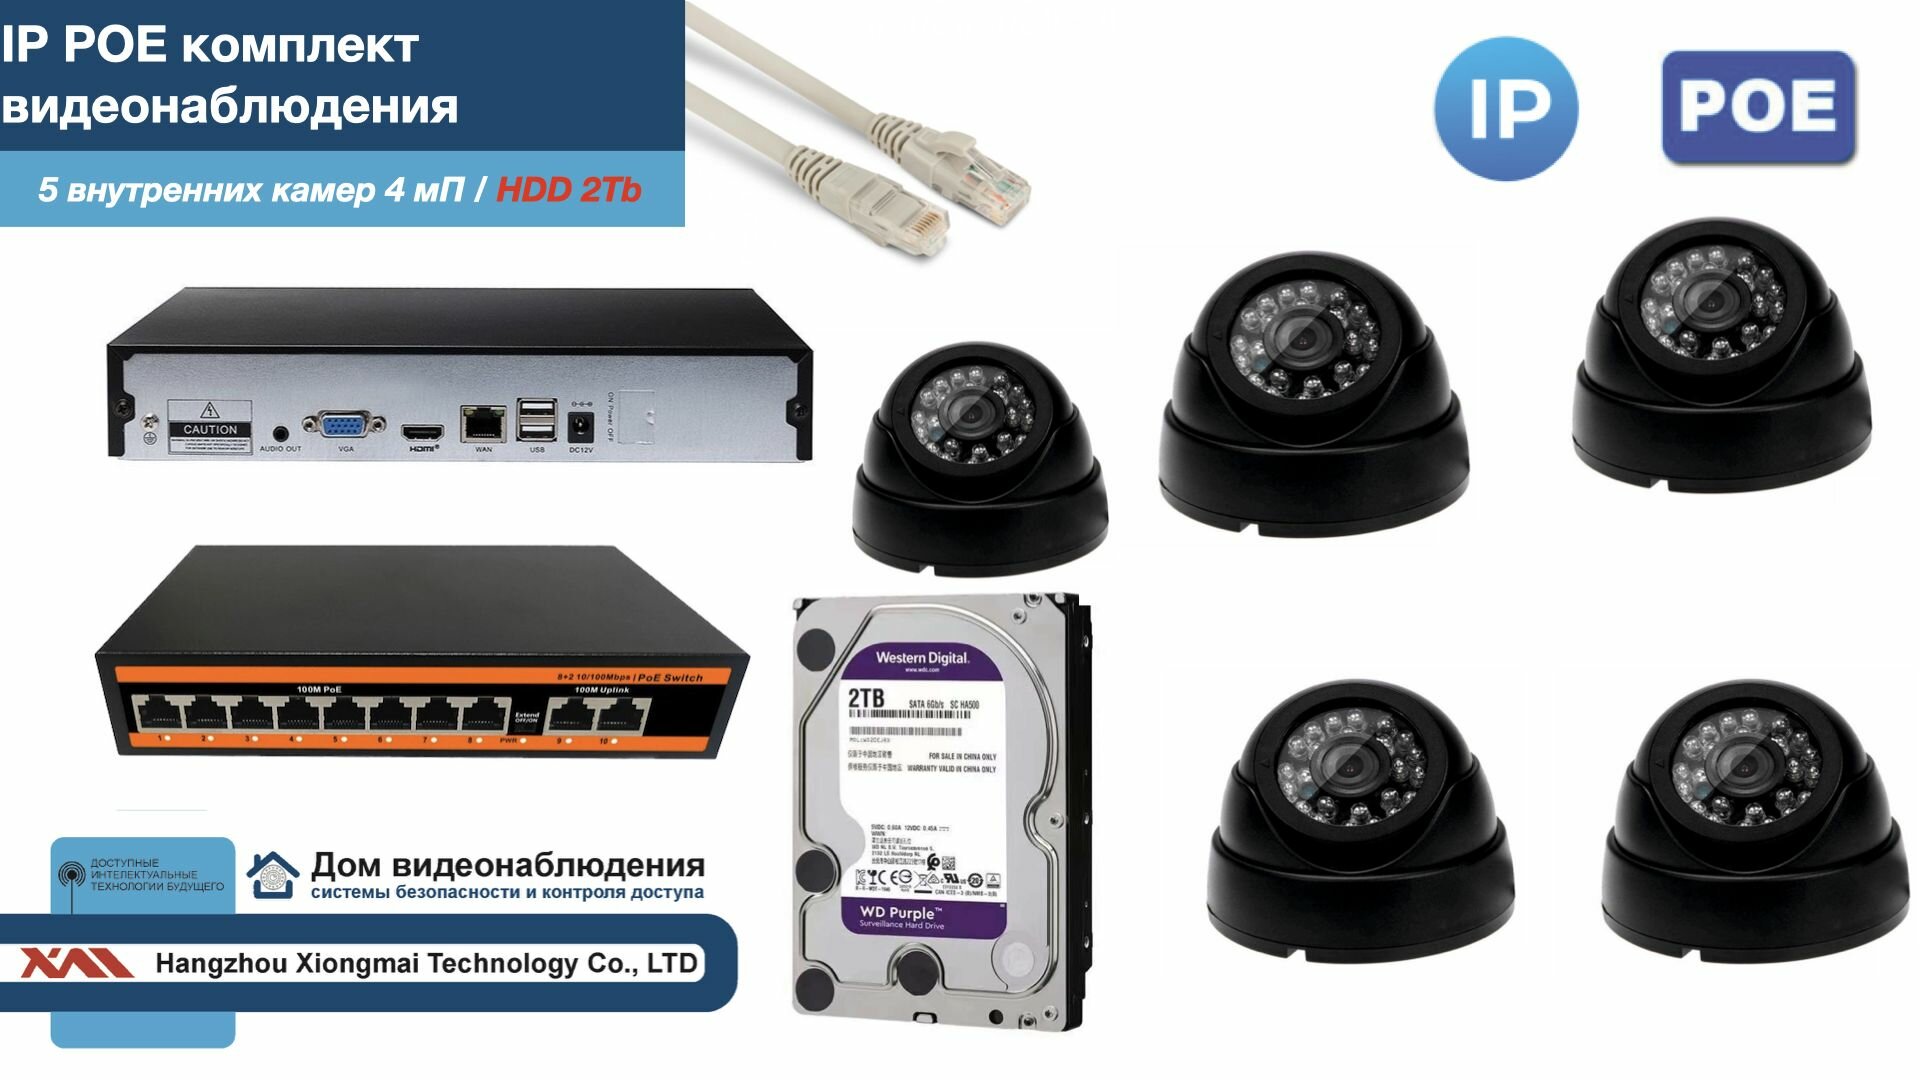 Полный IP POE комплект видеонаблюдения на 5 камер (KIT5IPPOE300B4MP-HDD2Tb)